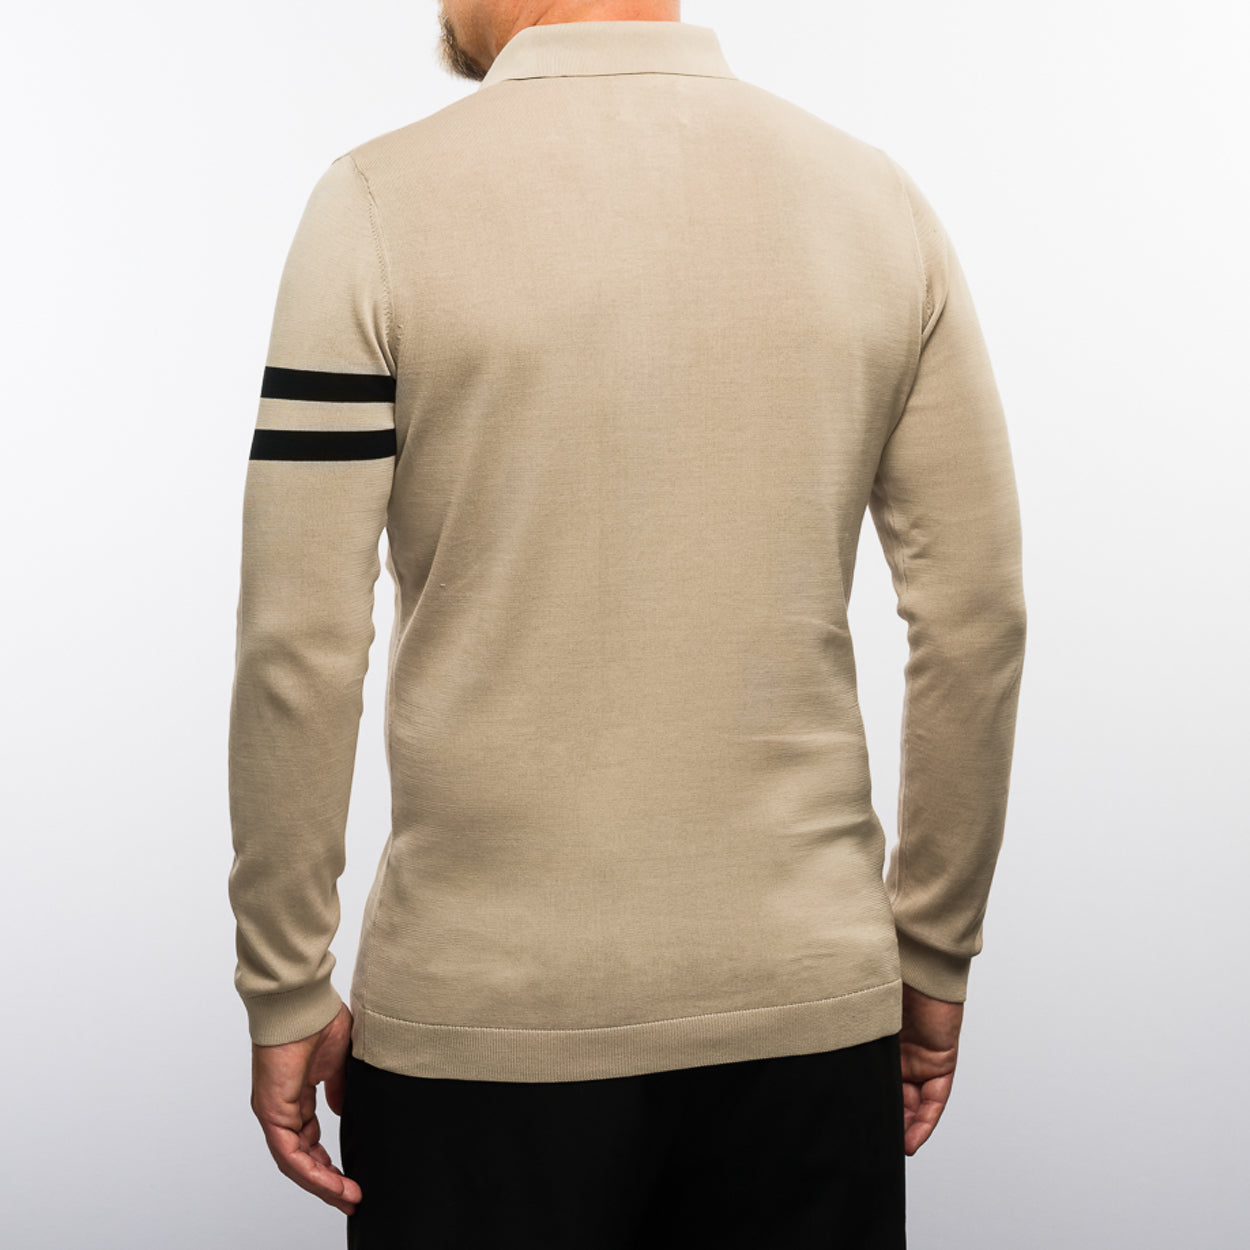 Poloshirt - The Polo Longsleeve Mercerized Stripes